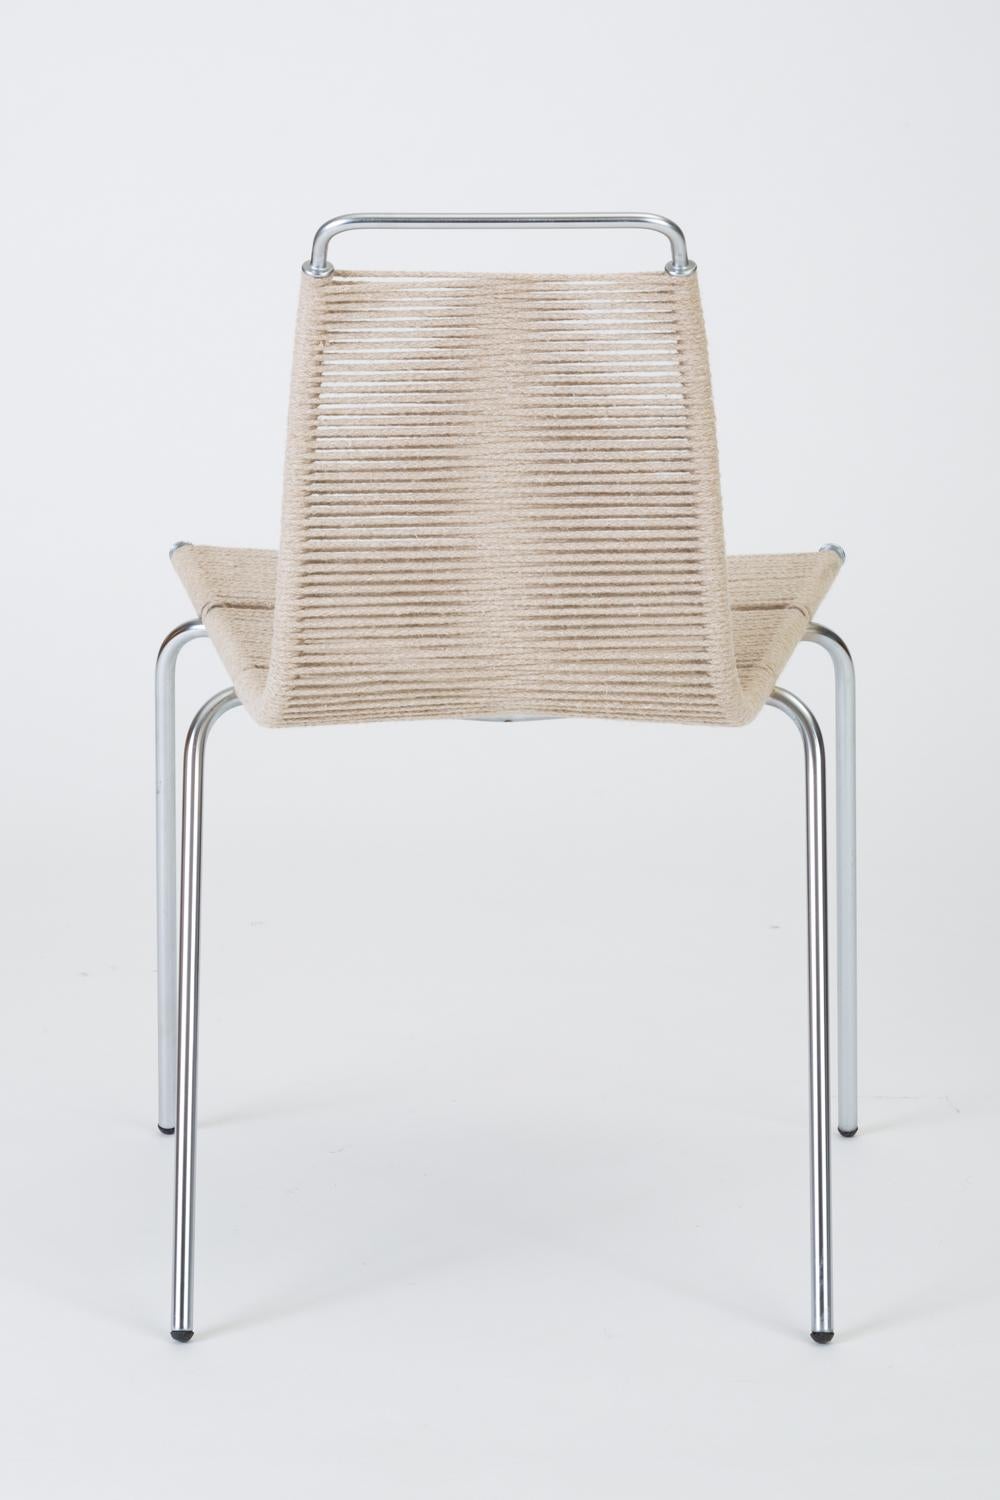 Steel Single PK-1 Dining or Accent Chair by Poul Kjærholm for E Kold Christensen